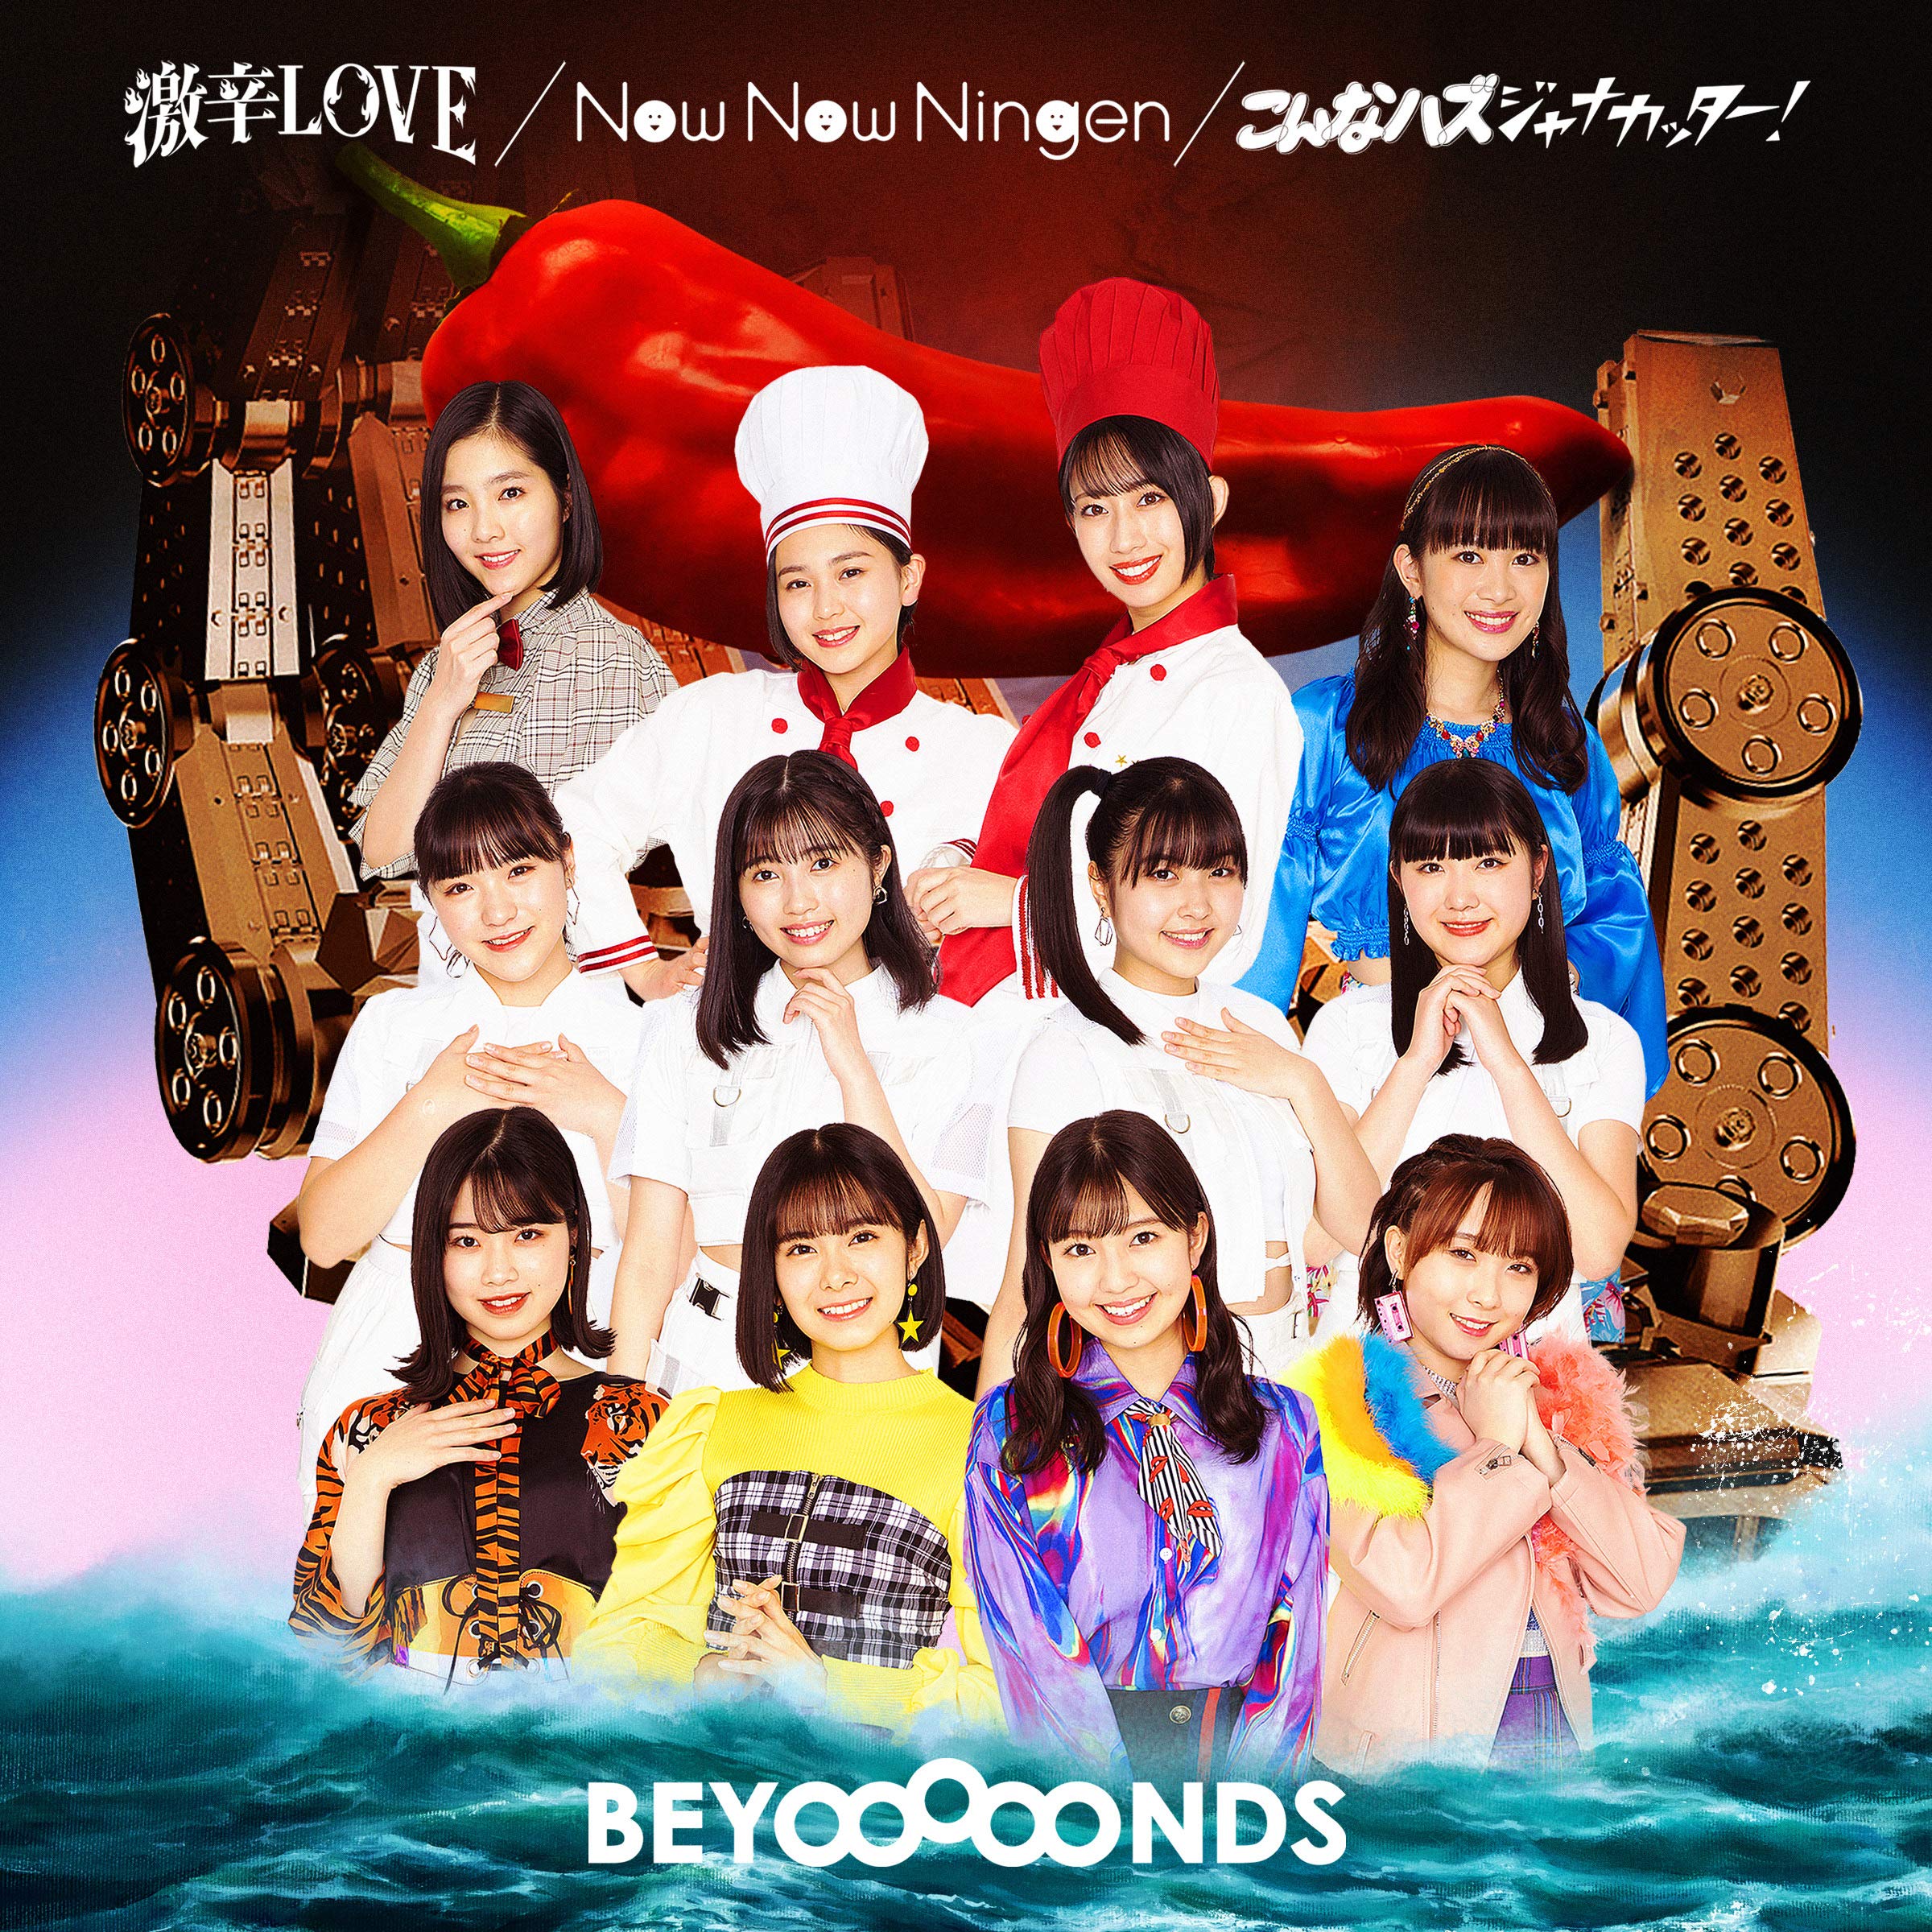 BEYOOOOONDS (ビヨーンズ) - 激辛LOVE / Now Now Ningen / こんなハズジャナカッター！ [FLAC 24bit/96kHz]